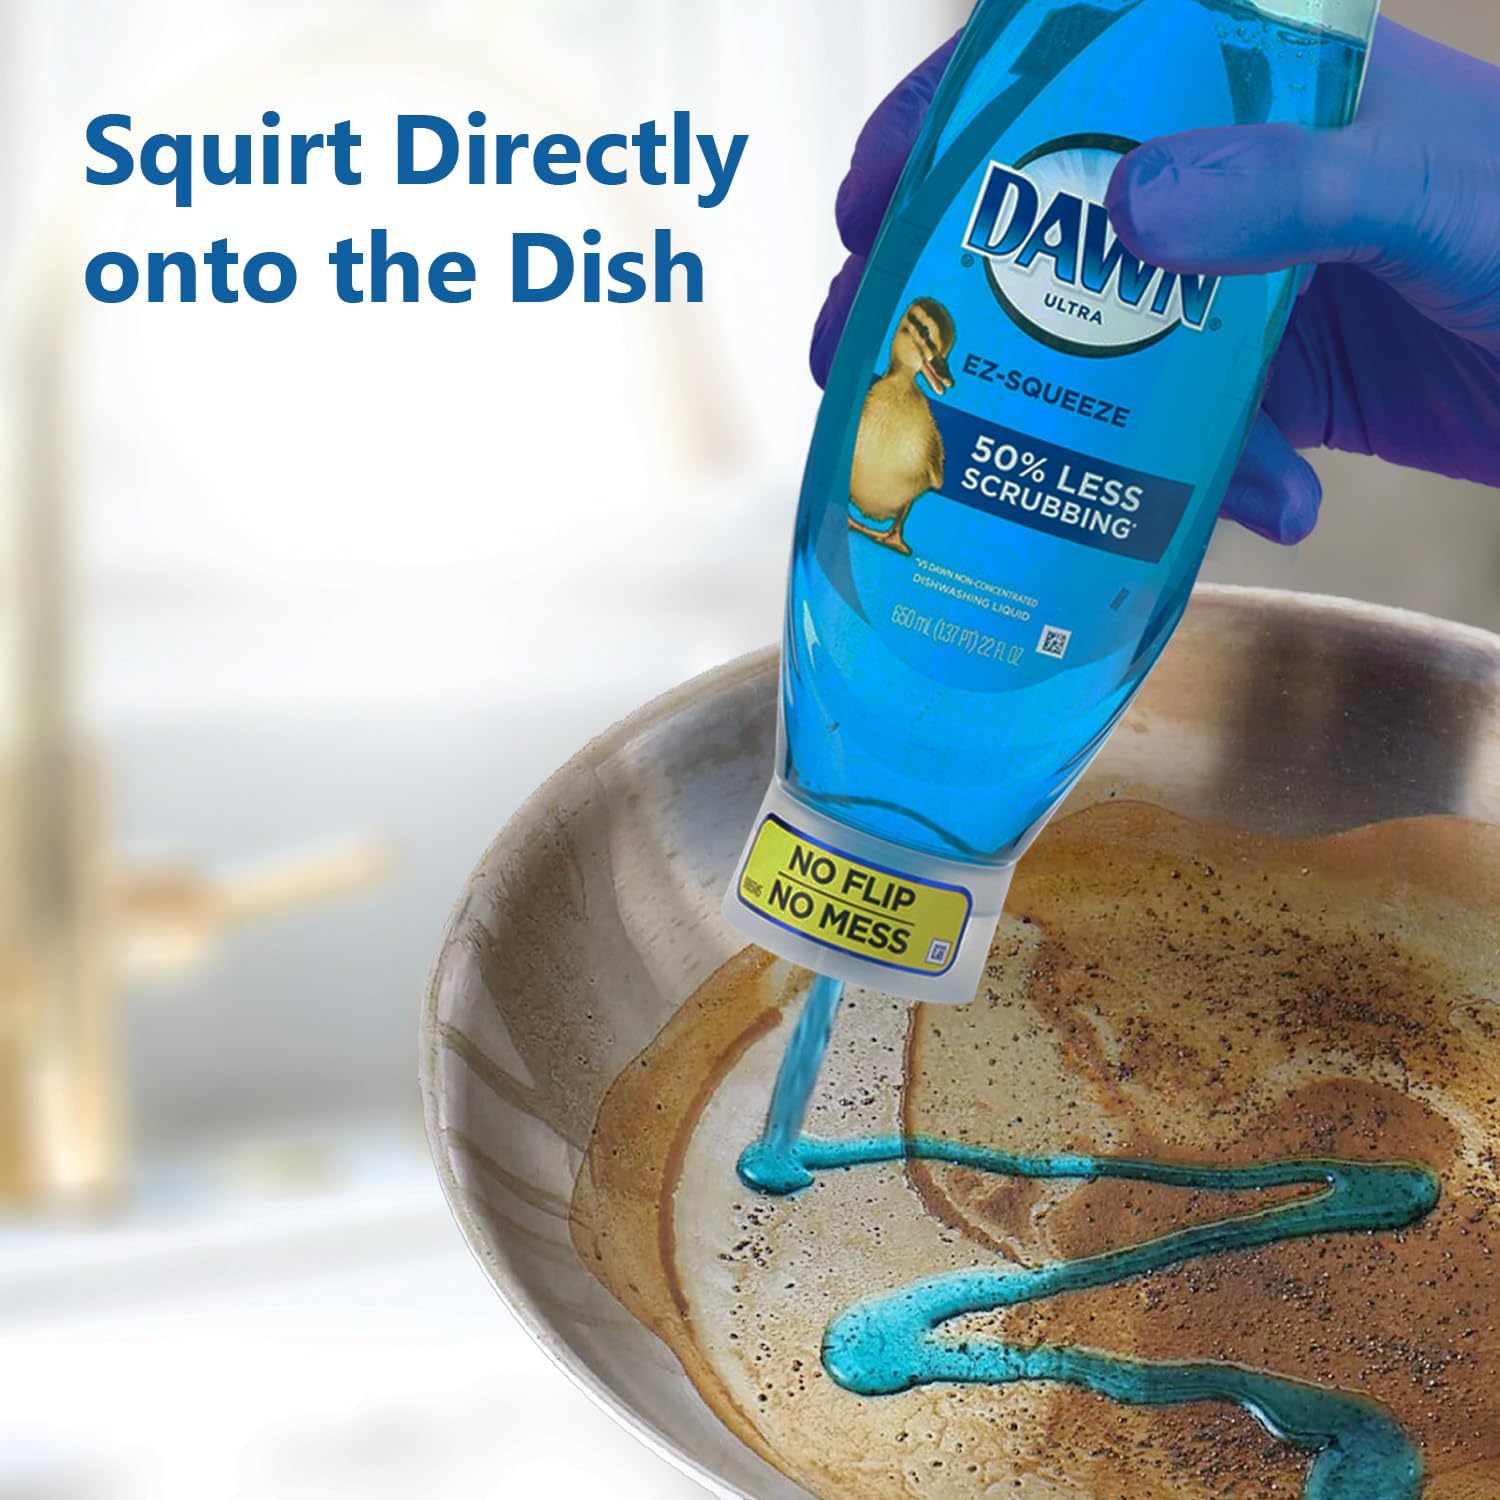 Peaknip Ultra Dawn Dish Soap Squeeze Bottle EZ-Squeze Dishwashing Liquid - Original Scent 22 fl oz. Bundled Together 100 Disposable Gloves : Health & Household